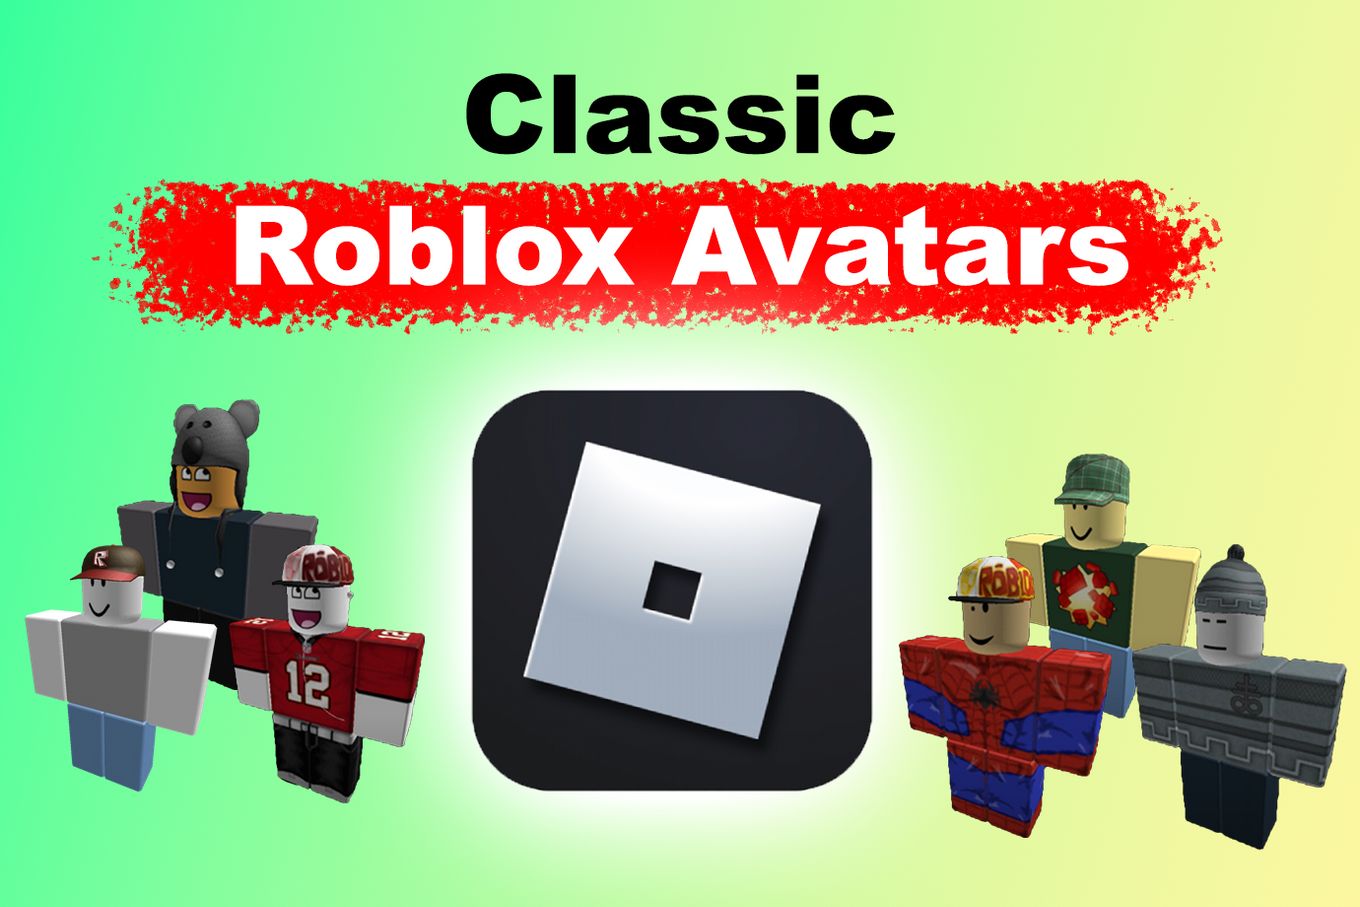 Classic Roblox Avatars